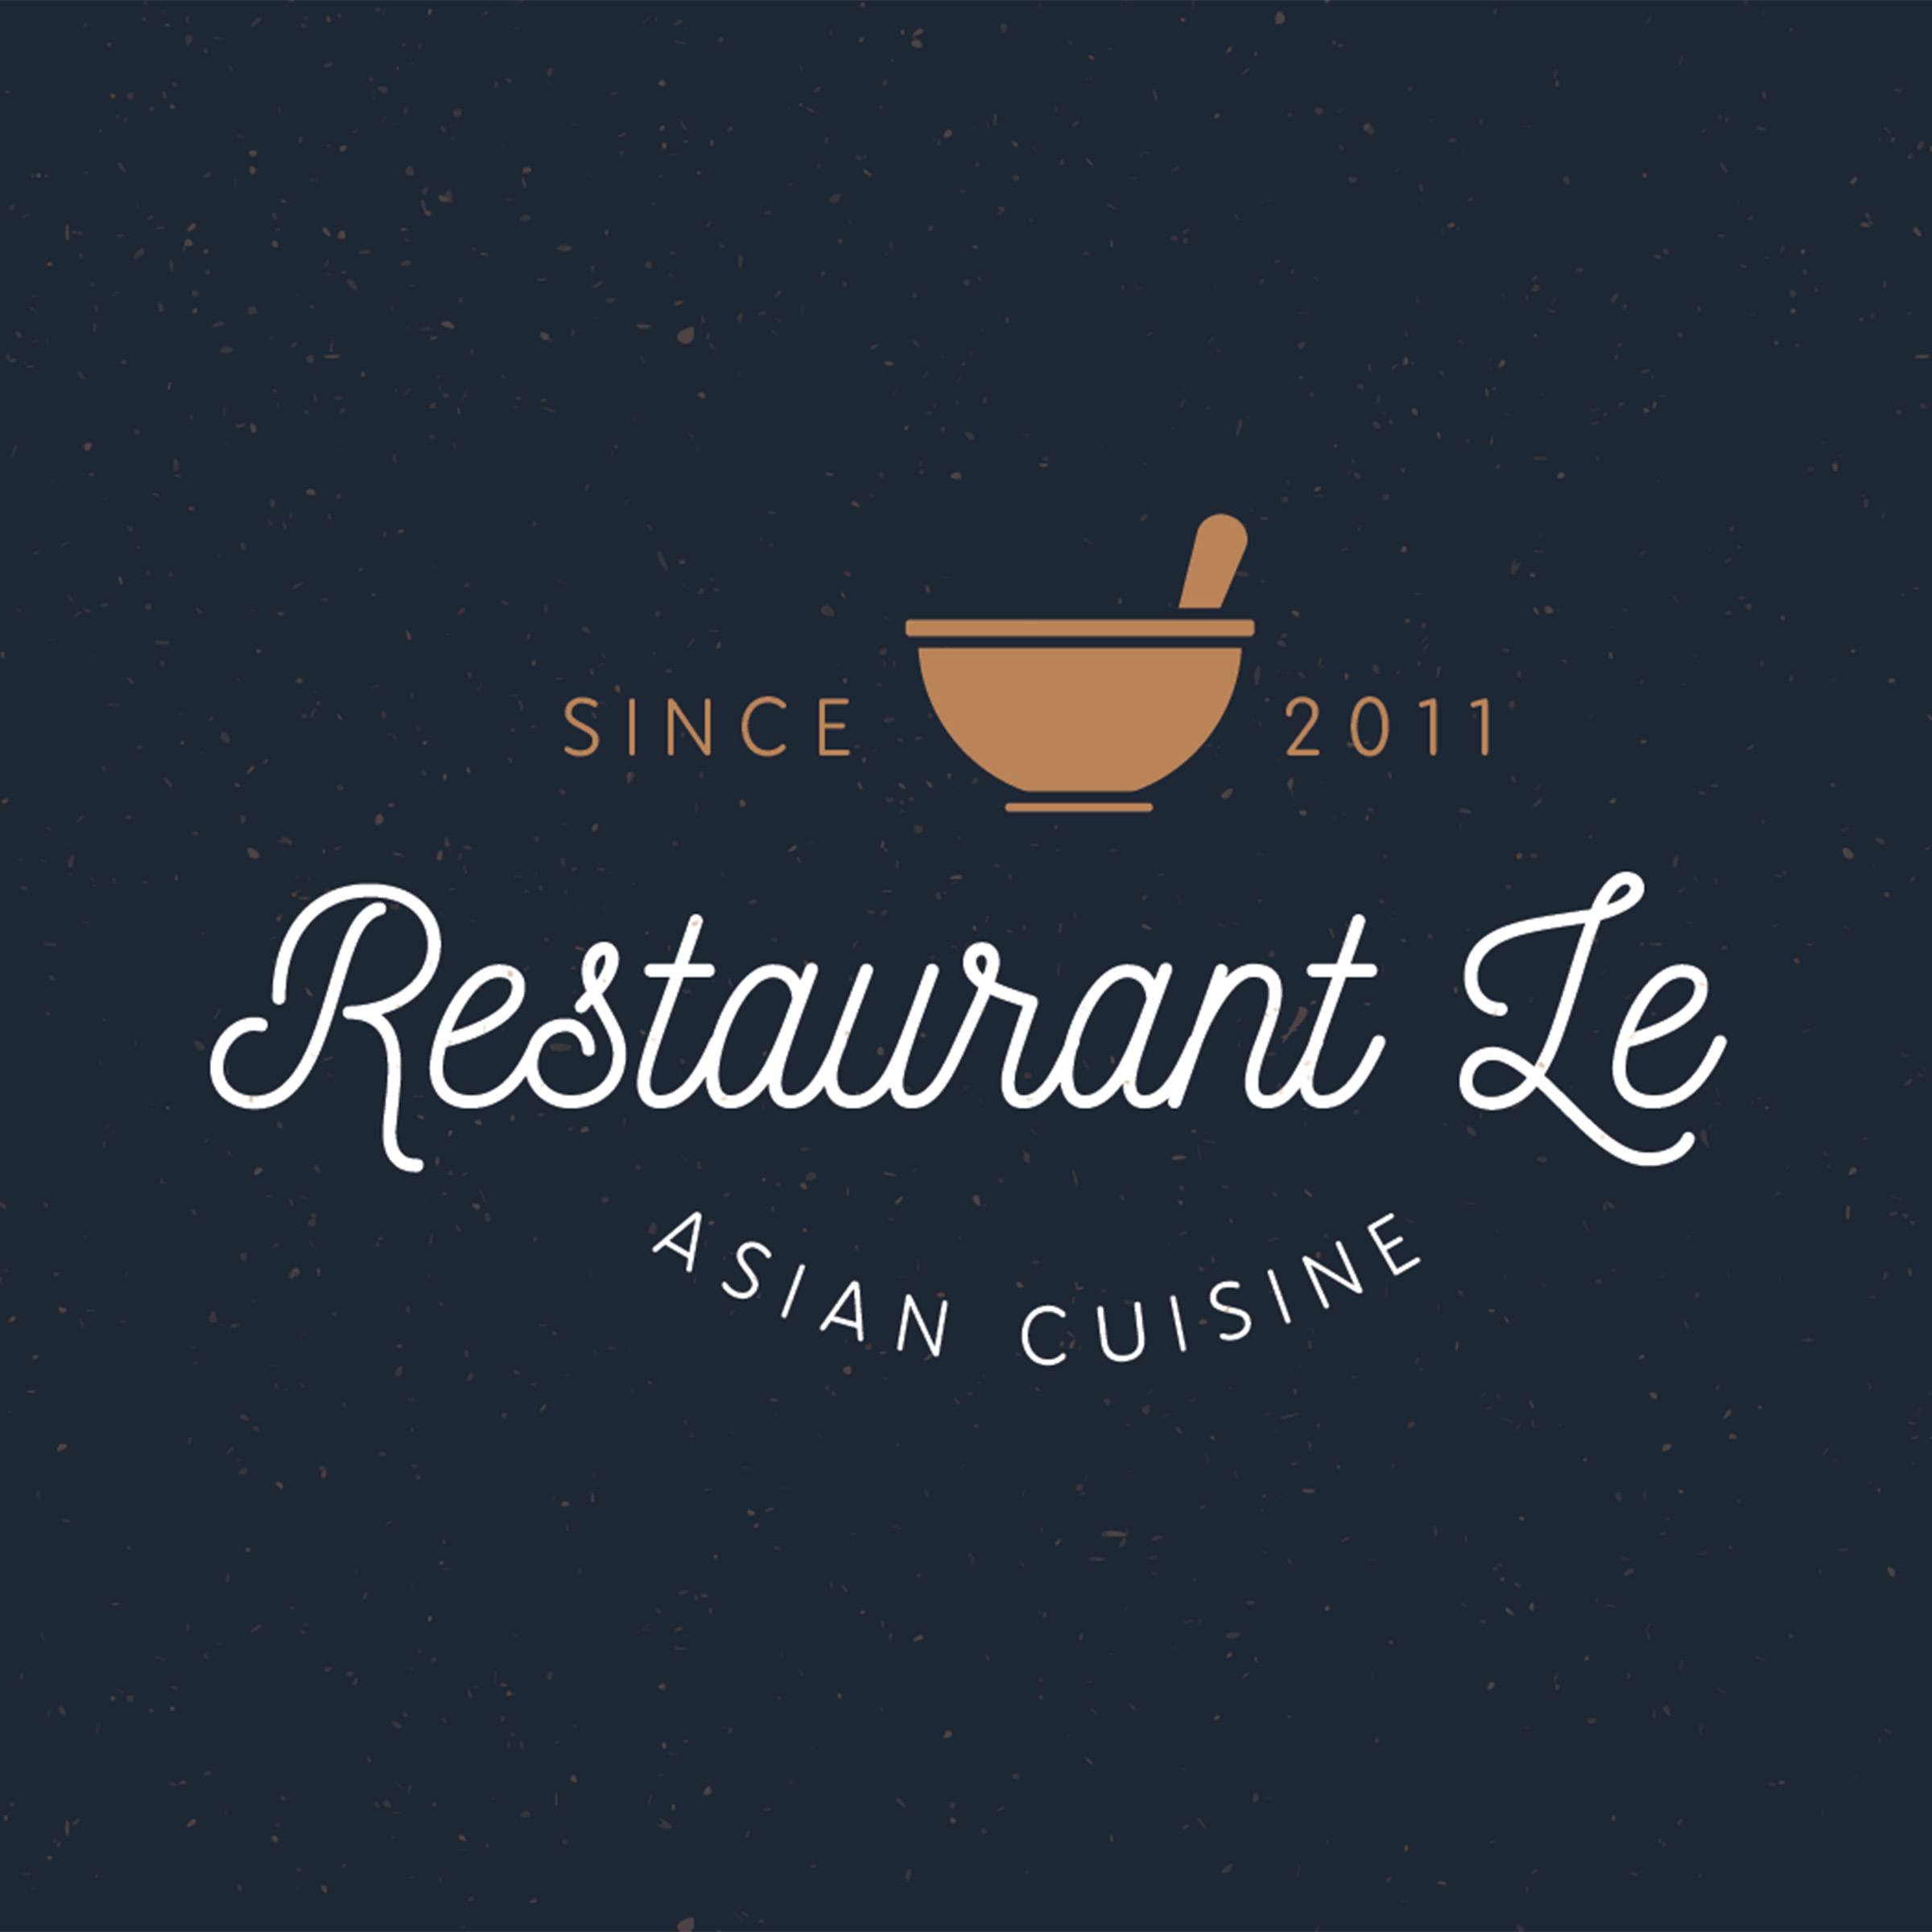  Restaurant LE logo